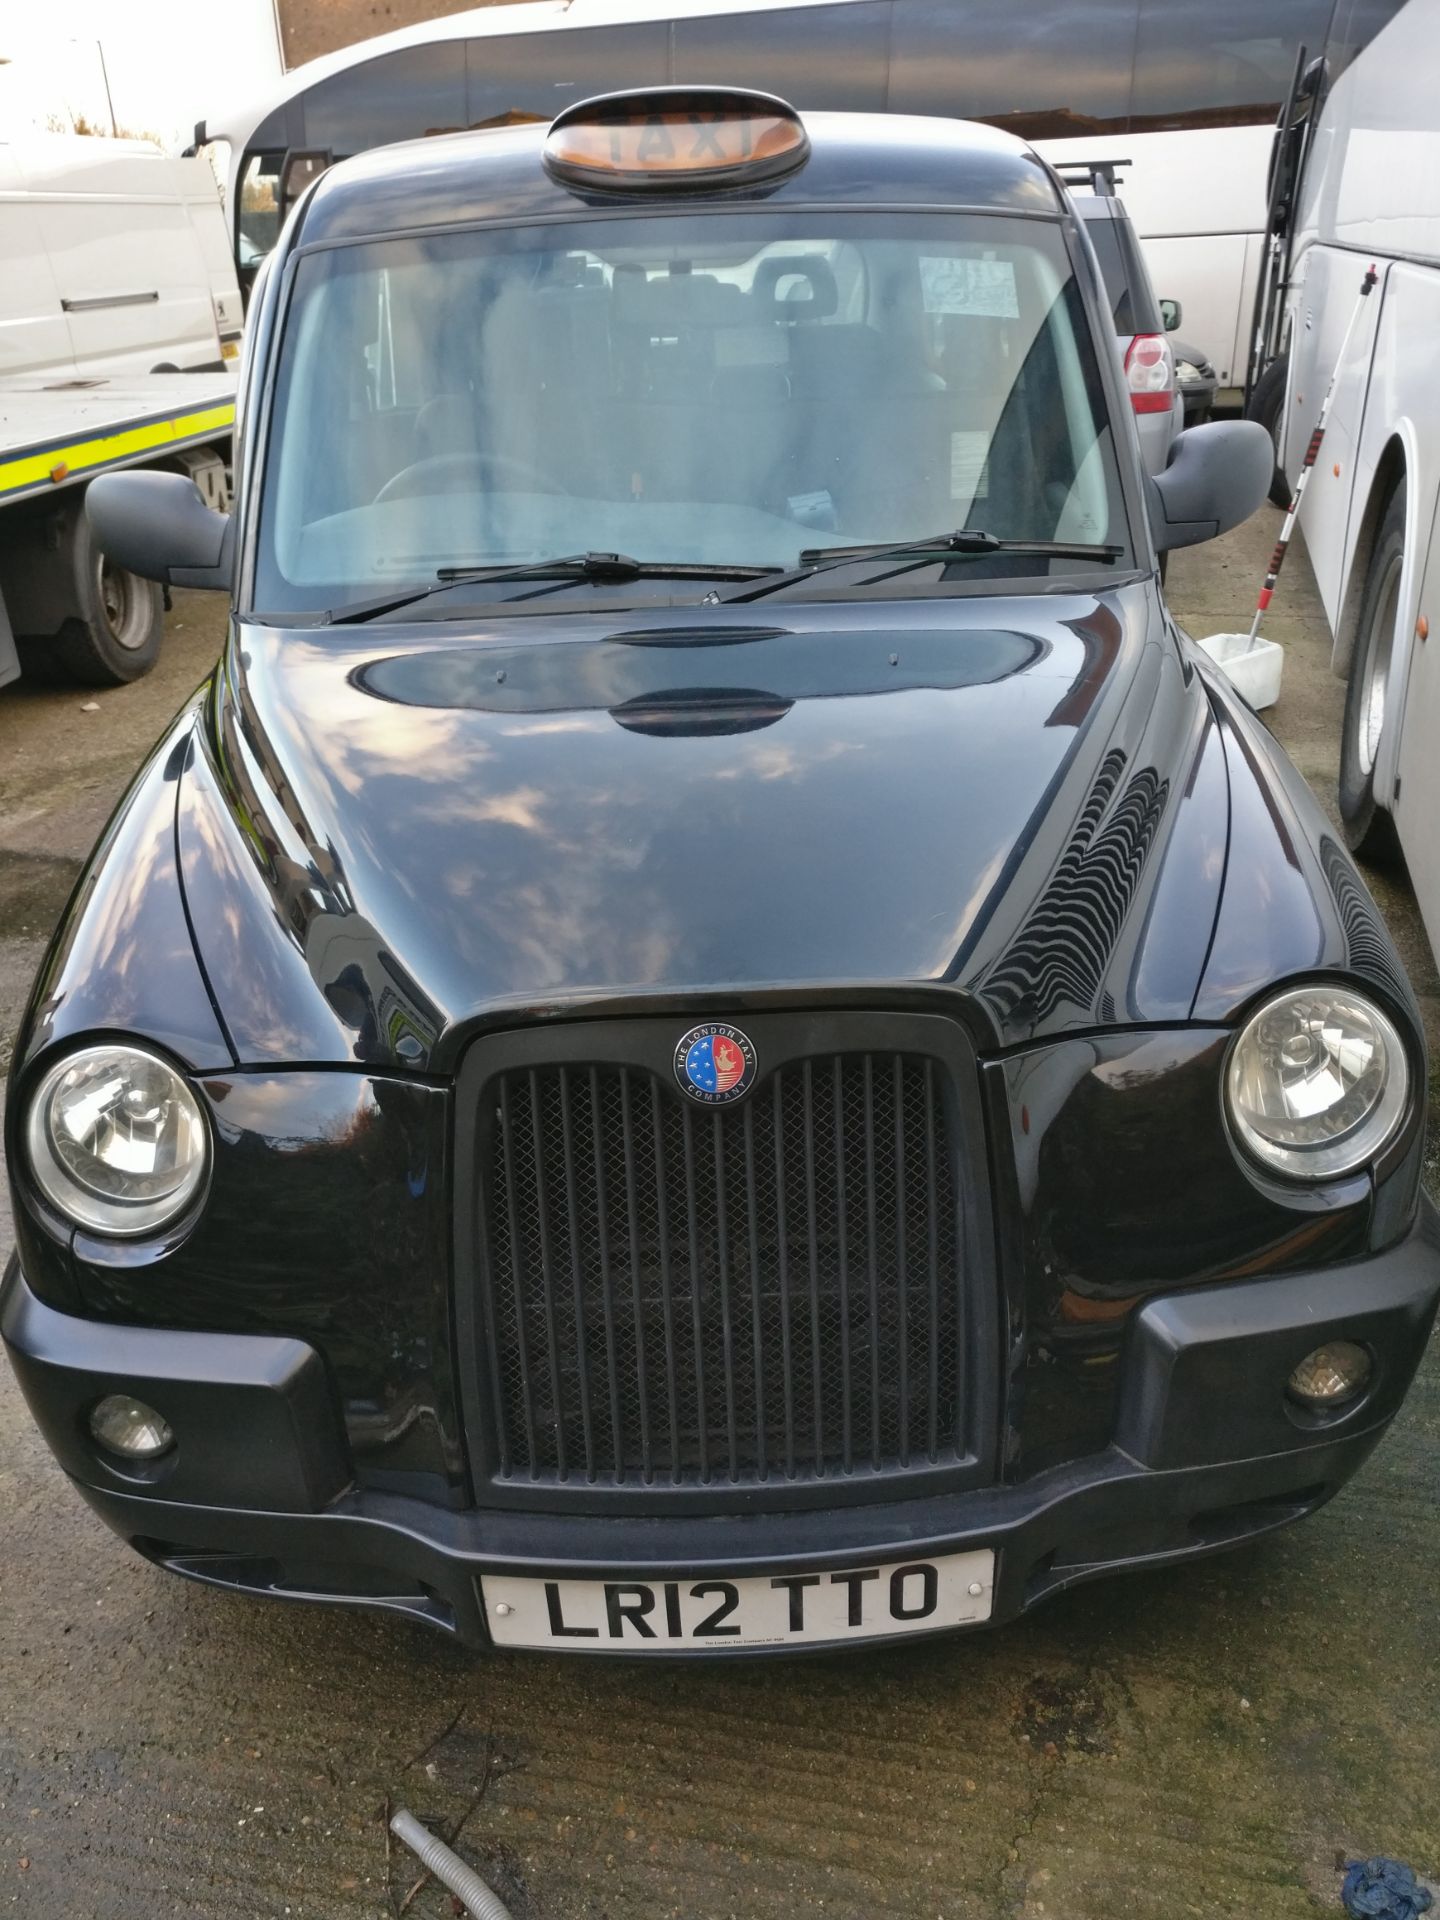 * 2012 London Taxis International FX4 Auto ''Black Cab'', Reg LR12 TTO, ?miles, MOT expired 30 March - Image 2 of 6